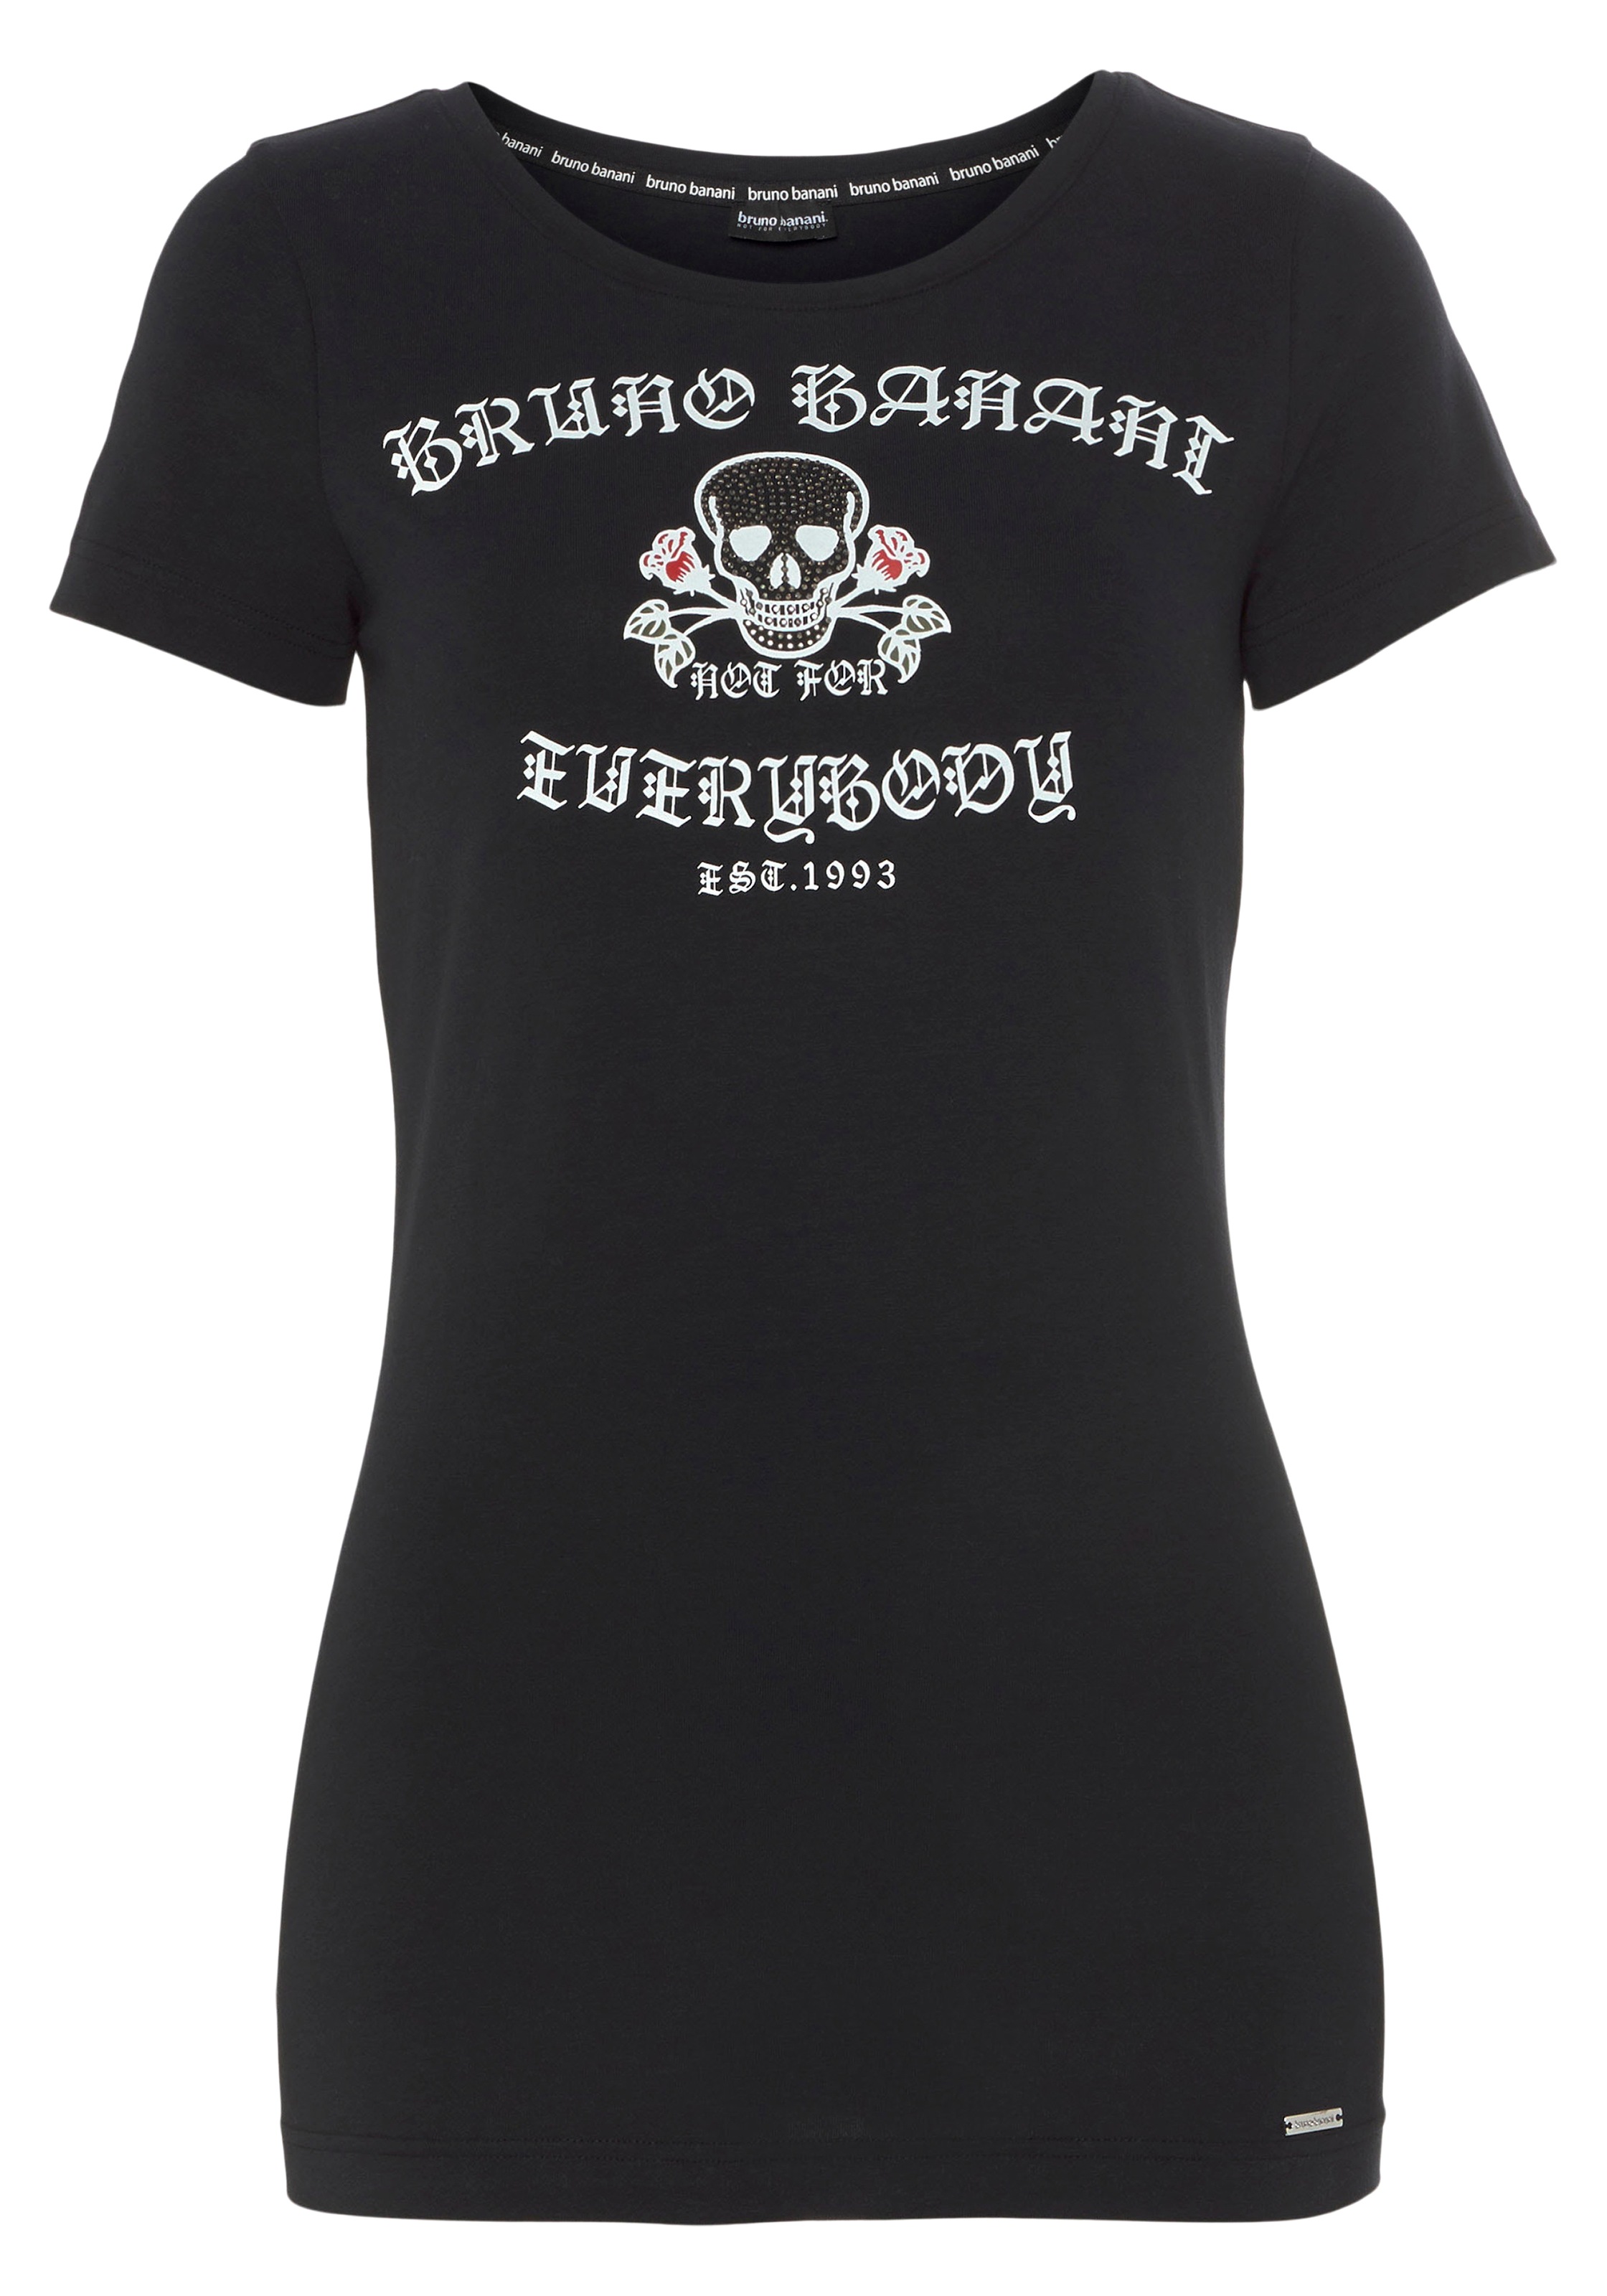 T-Shirt, bei Bruno Print mit Banani ♕ coolem